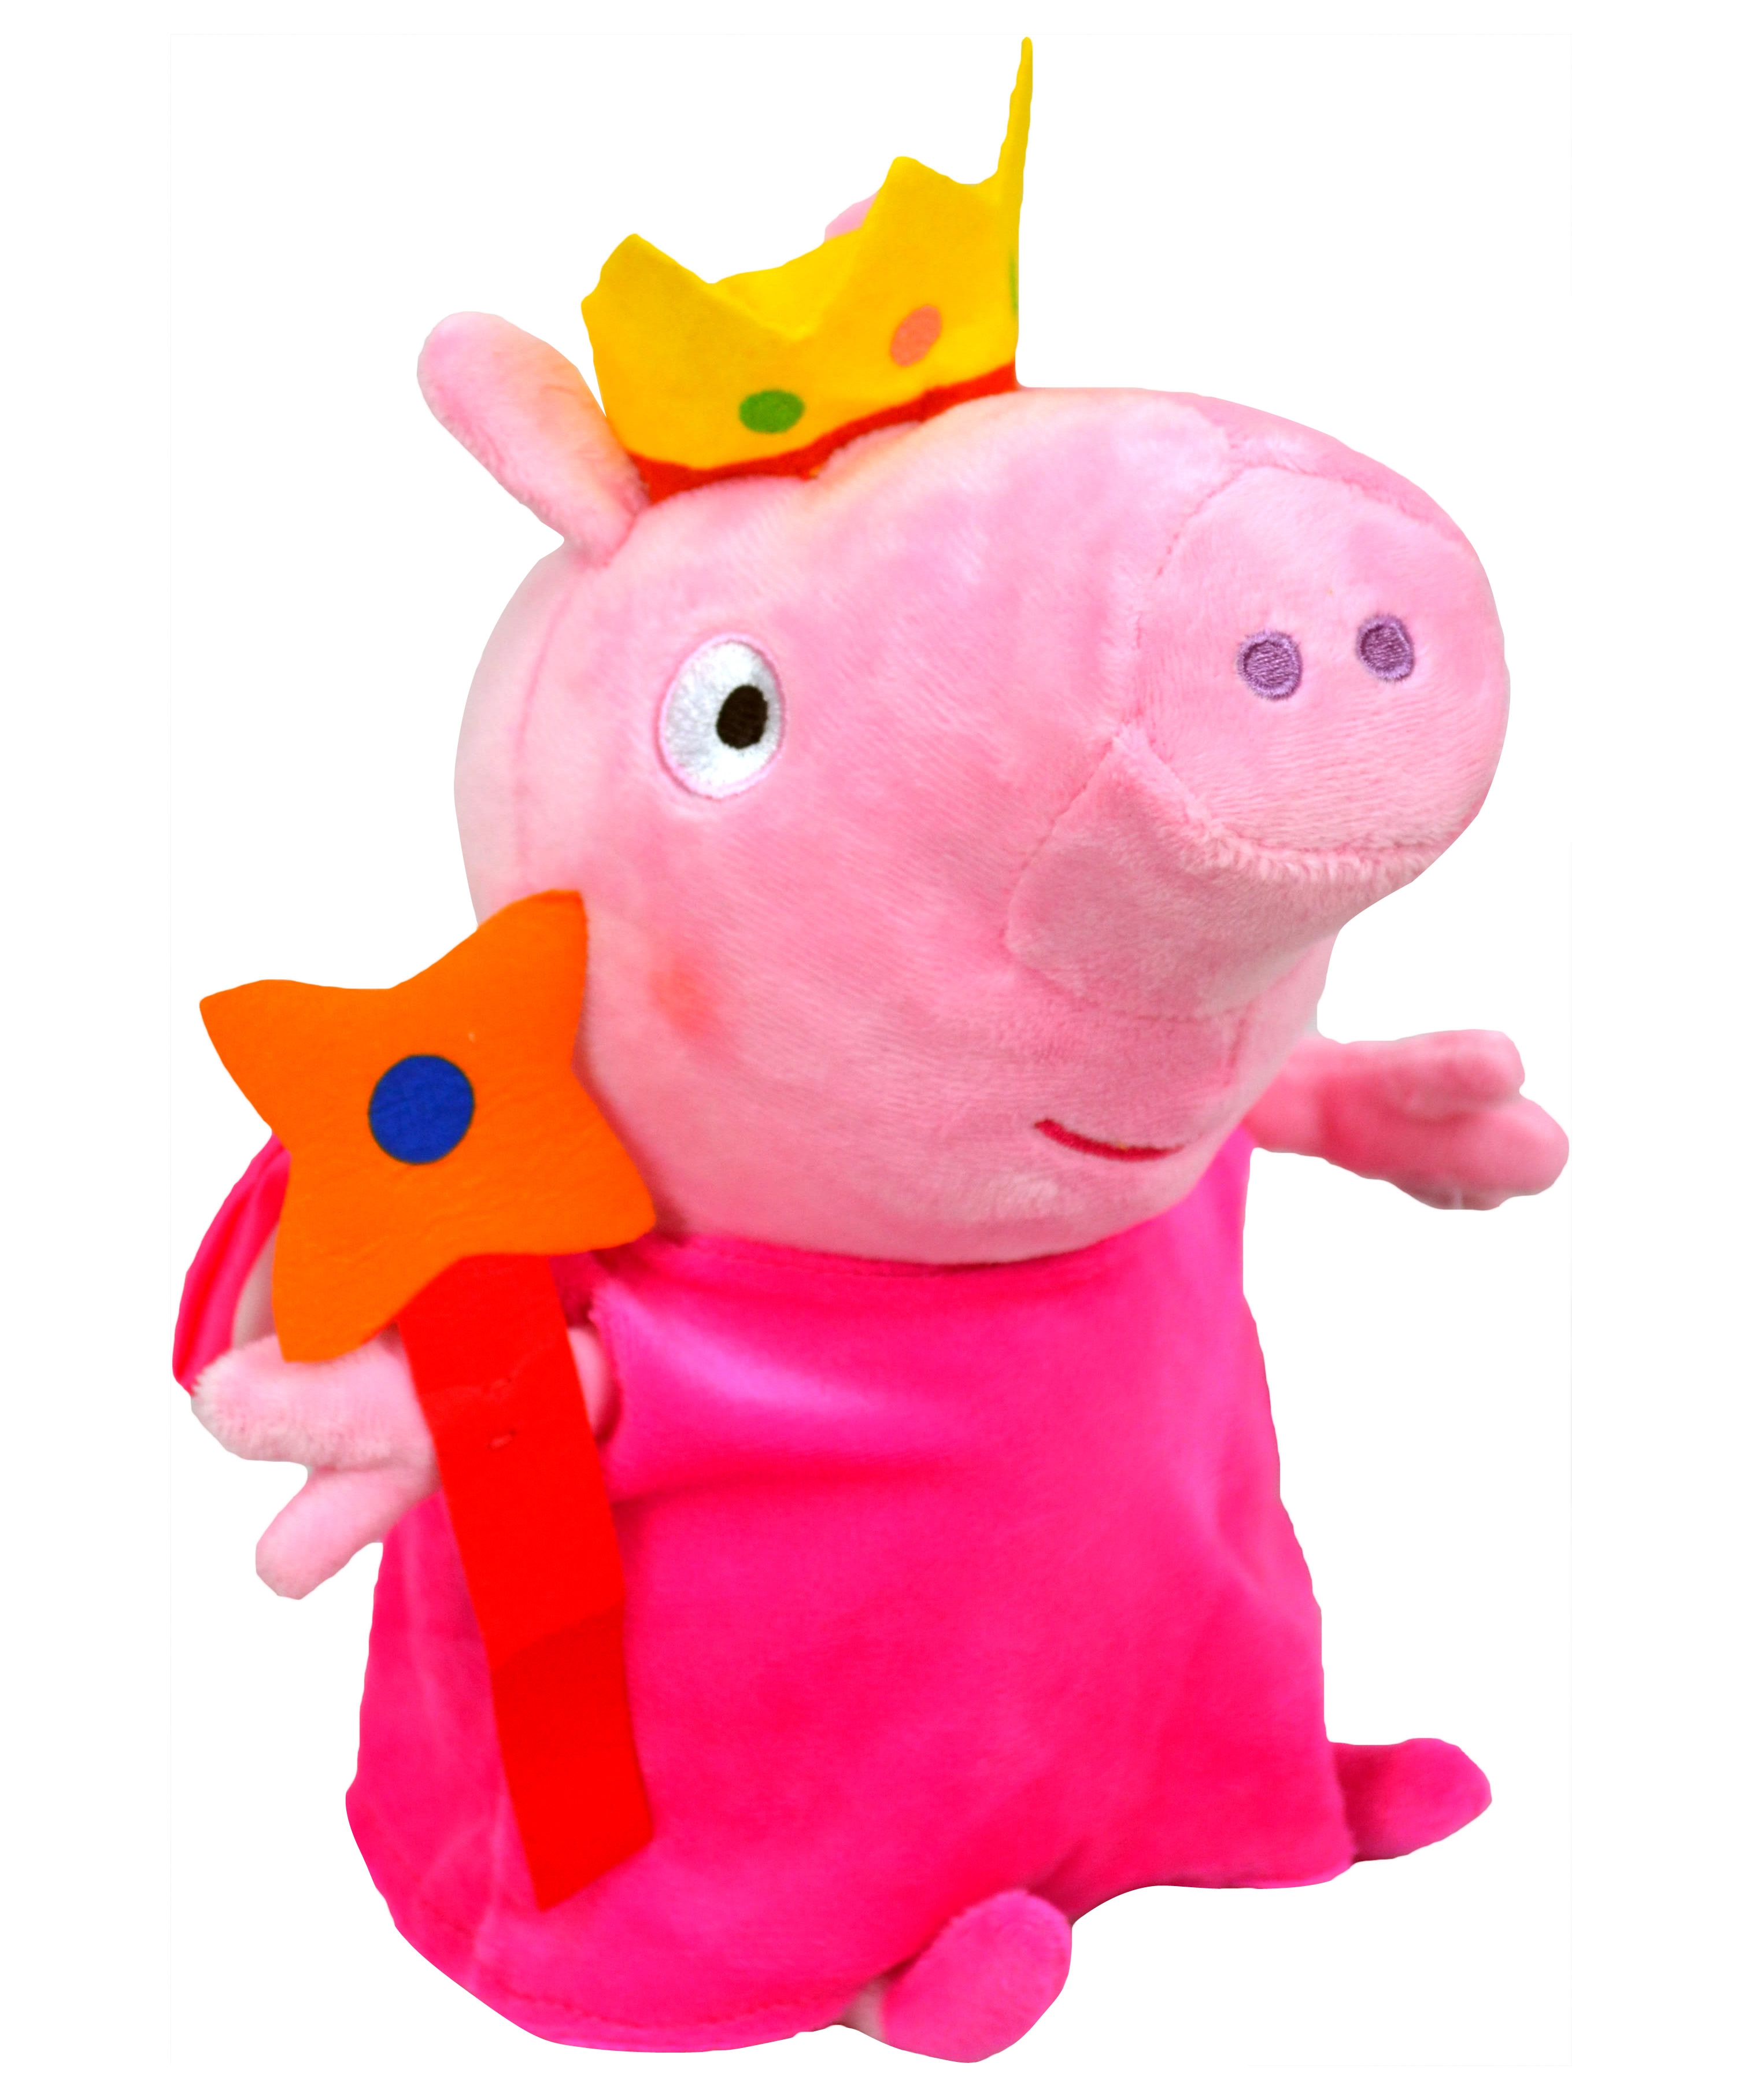 Peppa Pig 'Peppa' Queen 27cm Plush Soft Toy